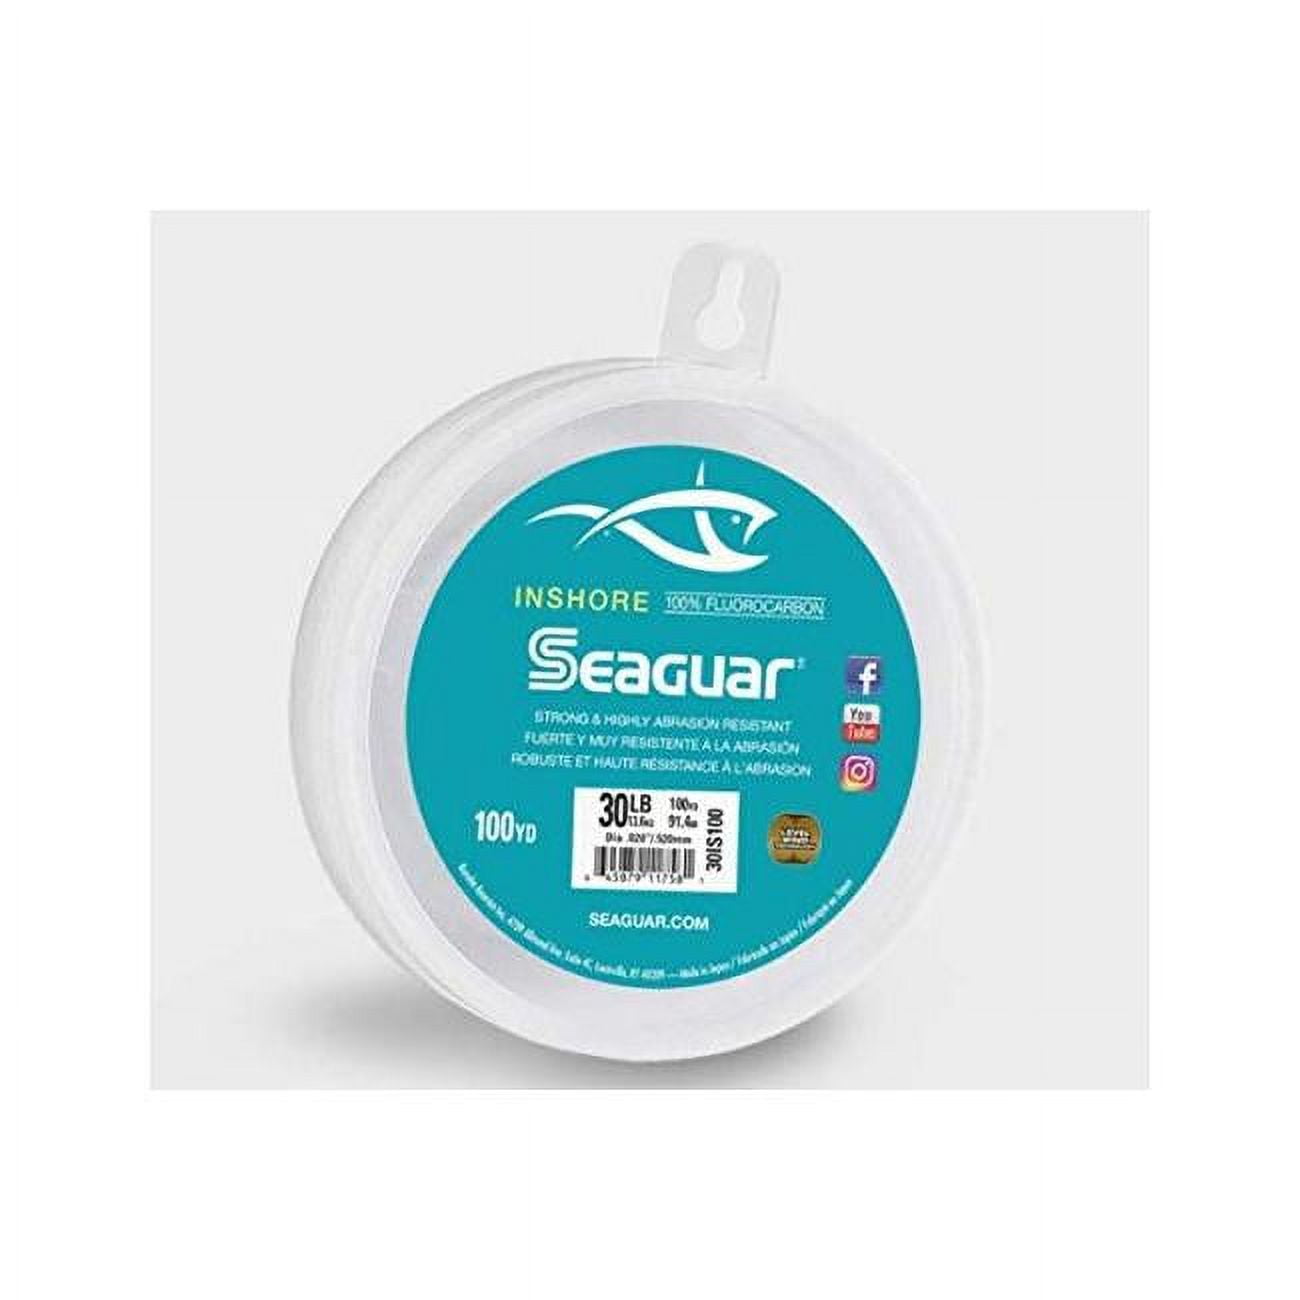 Seaguar Premium Manyu Fluorocarbon 30m Big Game Fishing Line 0.8